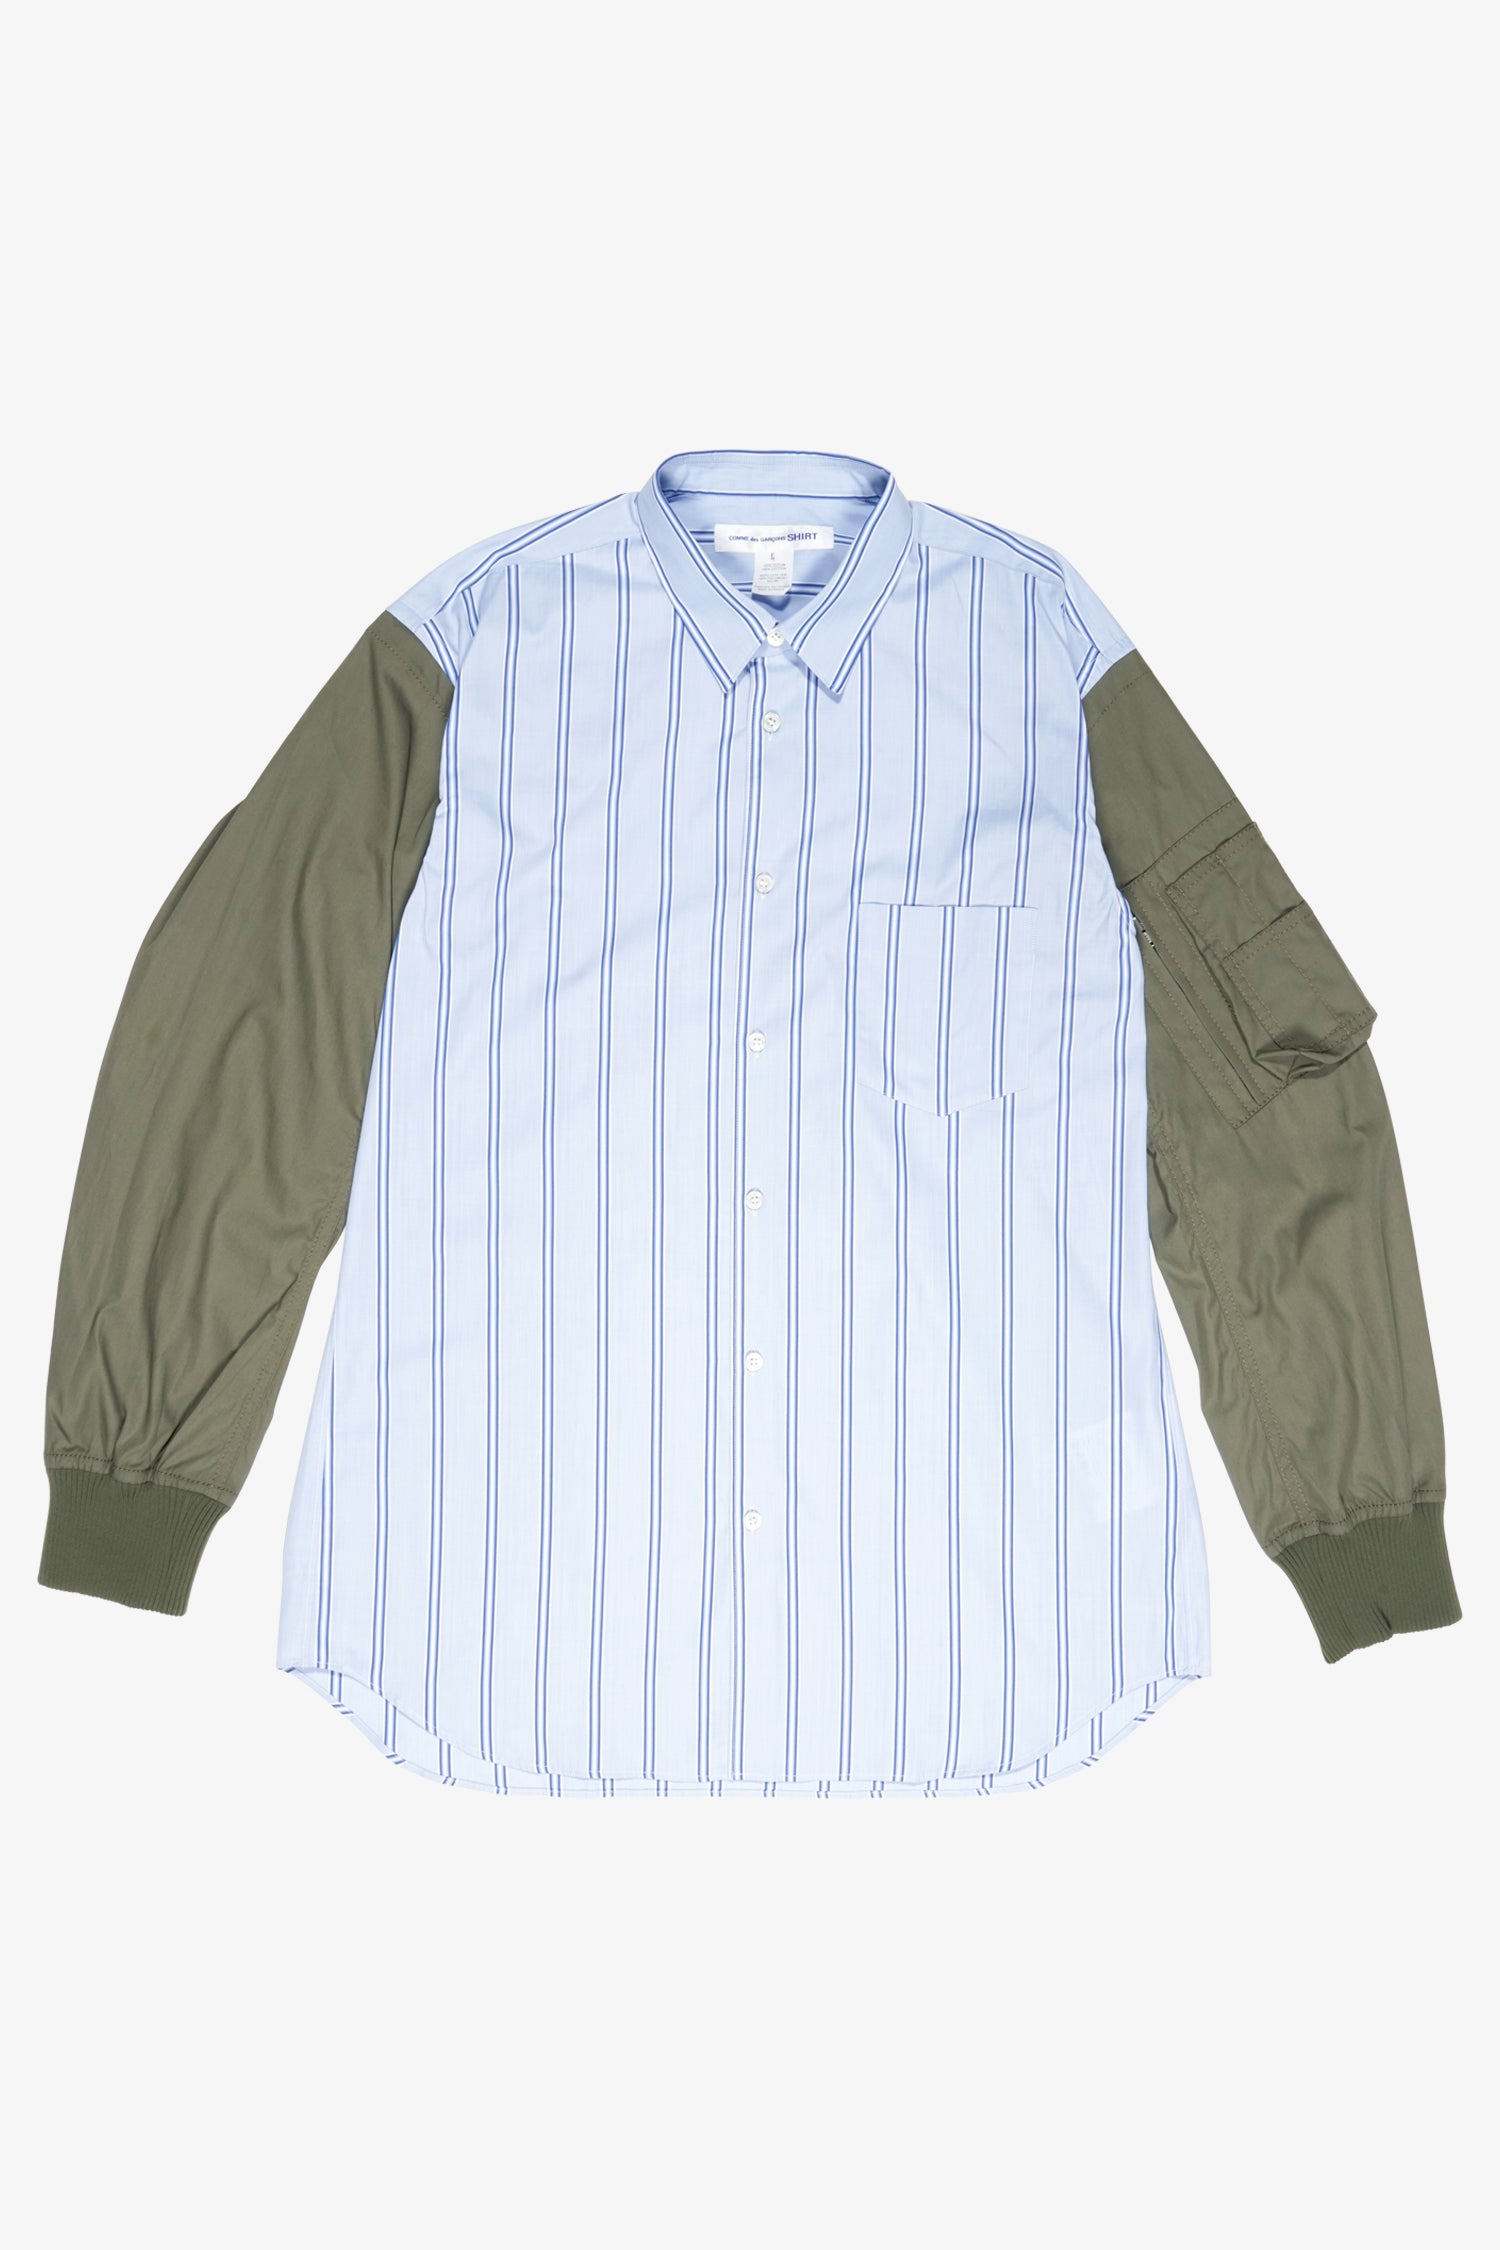 Selectshop FRAME - COMME DES GARÇONS SHIRT Bomber Sleeves Shirt Shirt Dubai